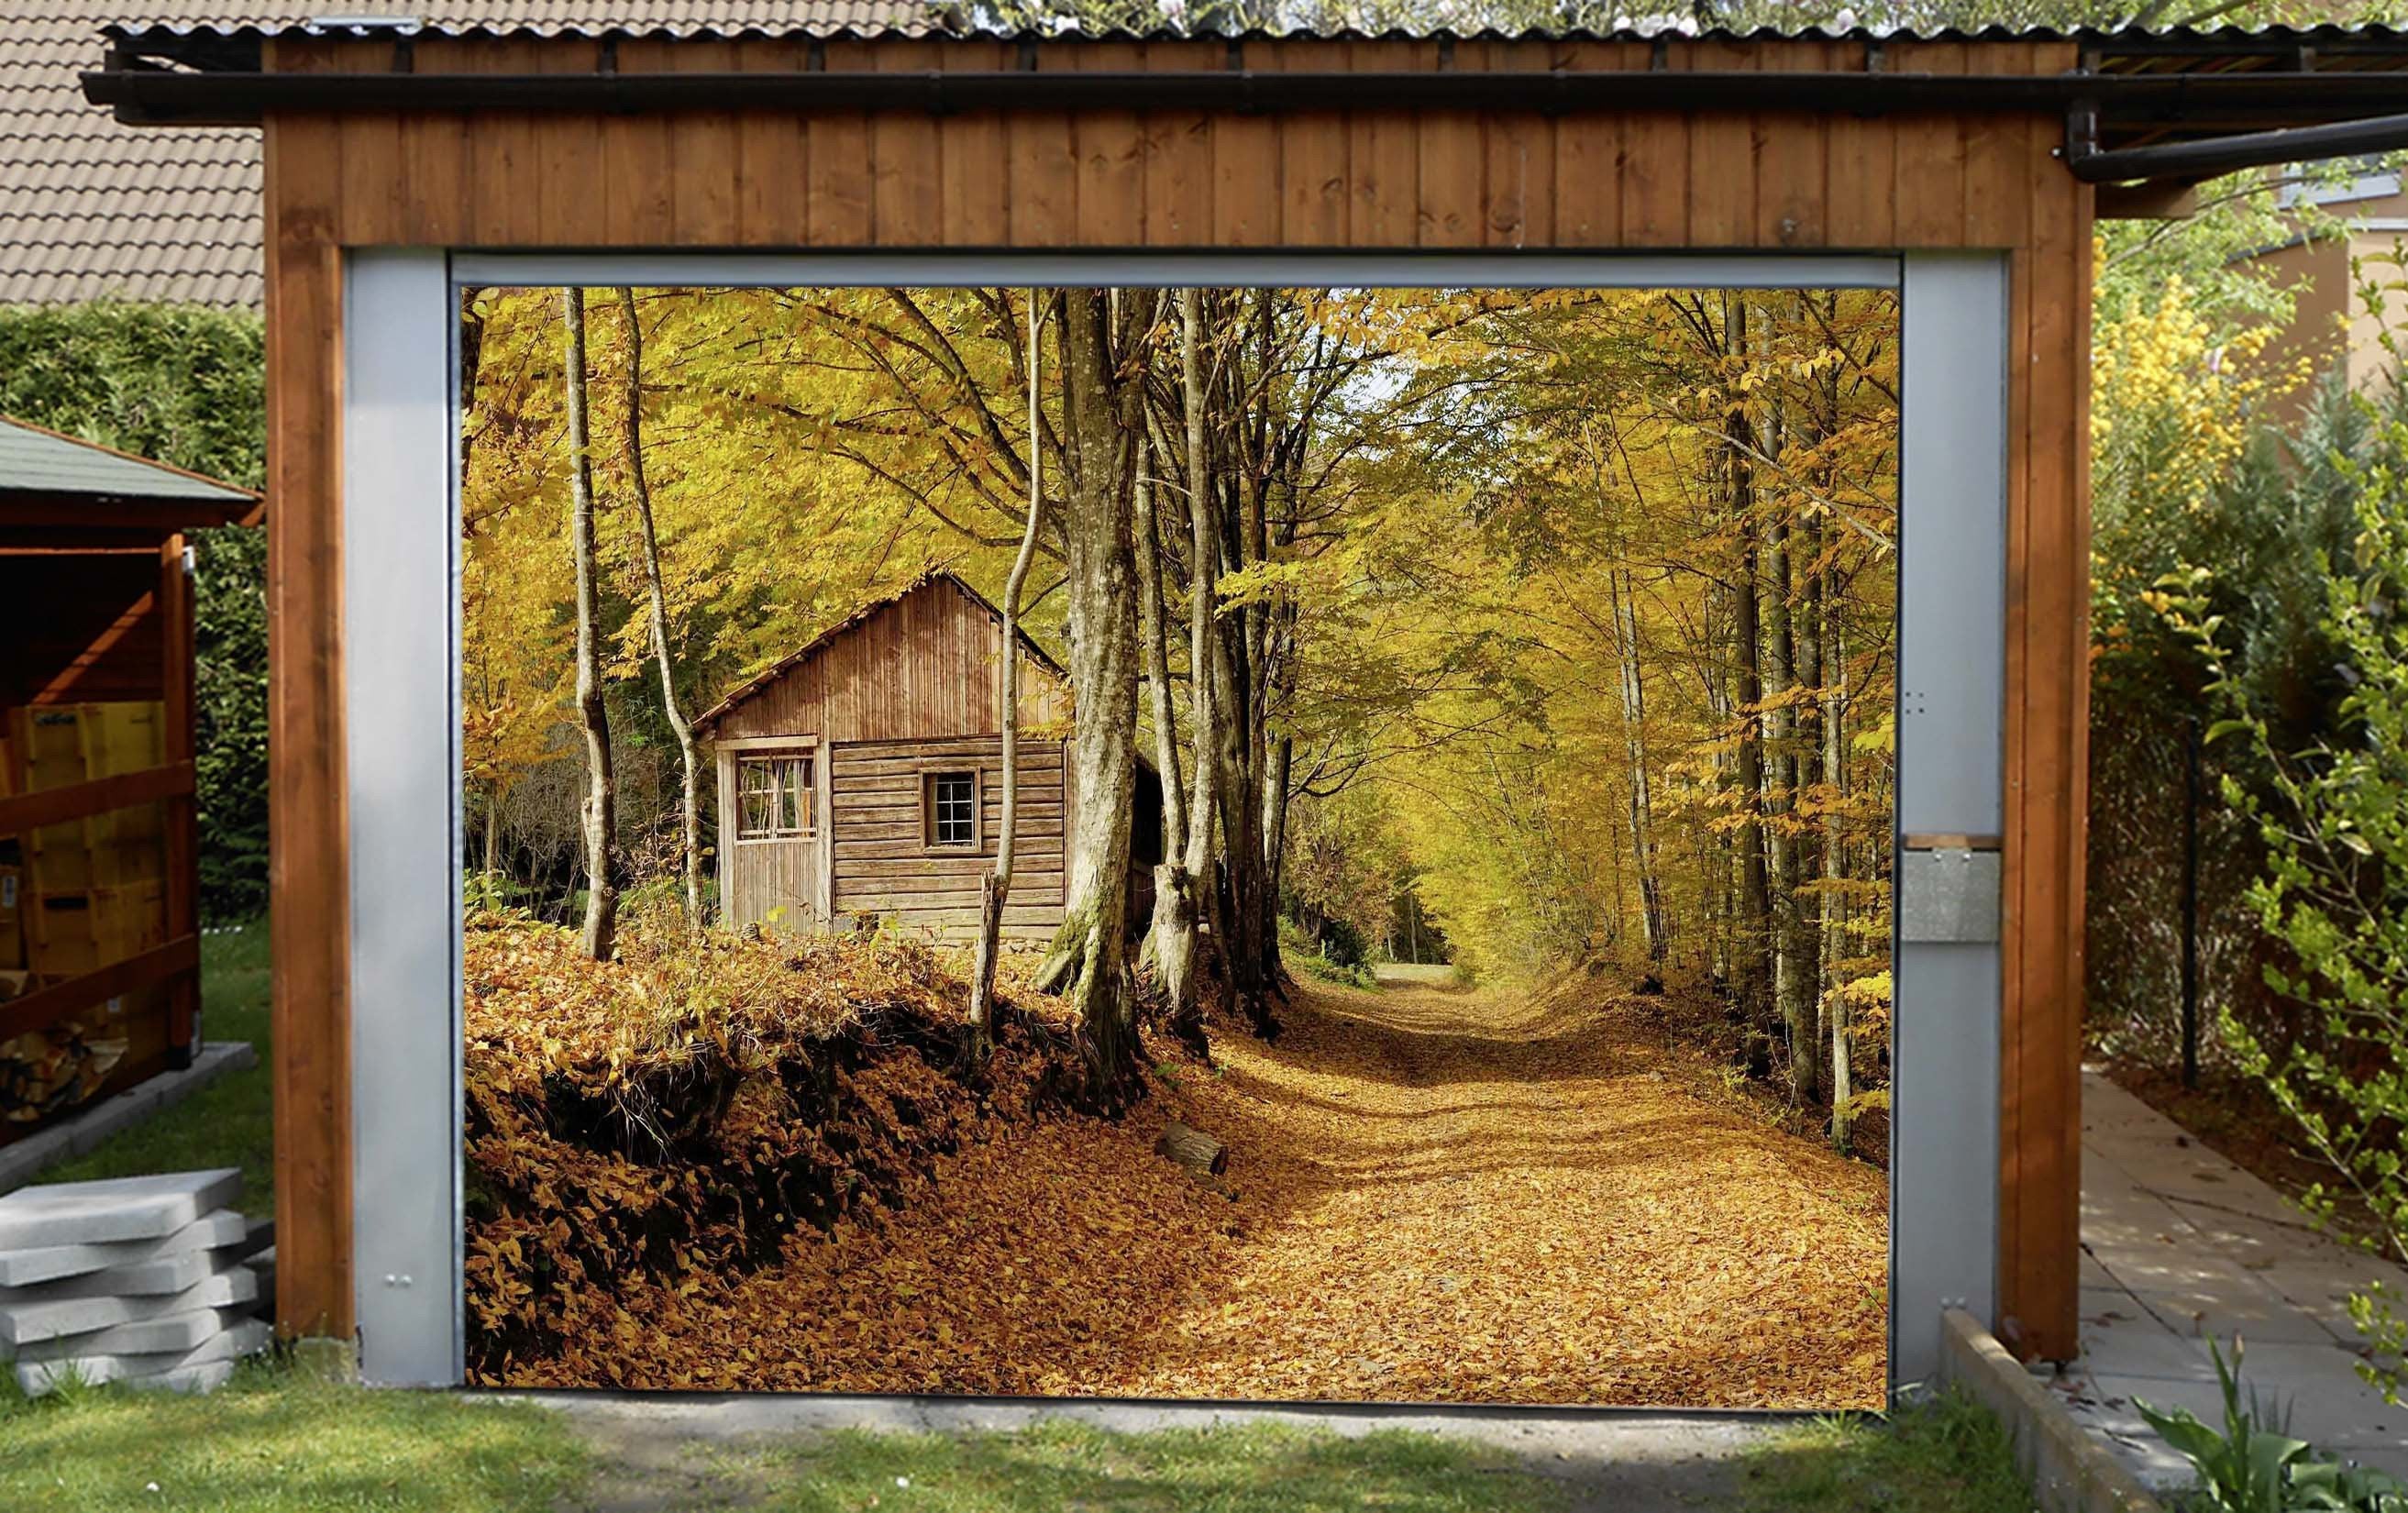 3D Forest Wood House 354 Garage Door Mural Wallpaper AJ Wallpaper 